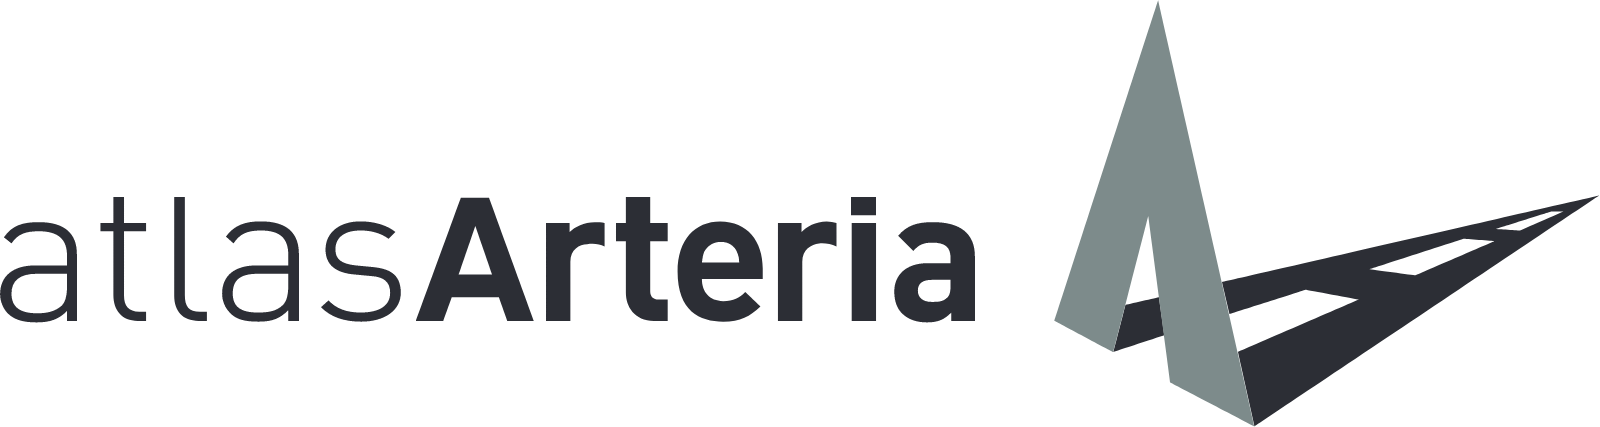 Atlas Arteria logo large (transparent PNG)